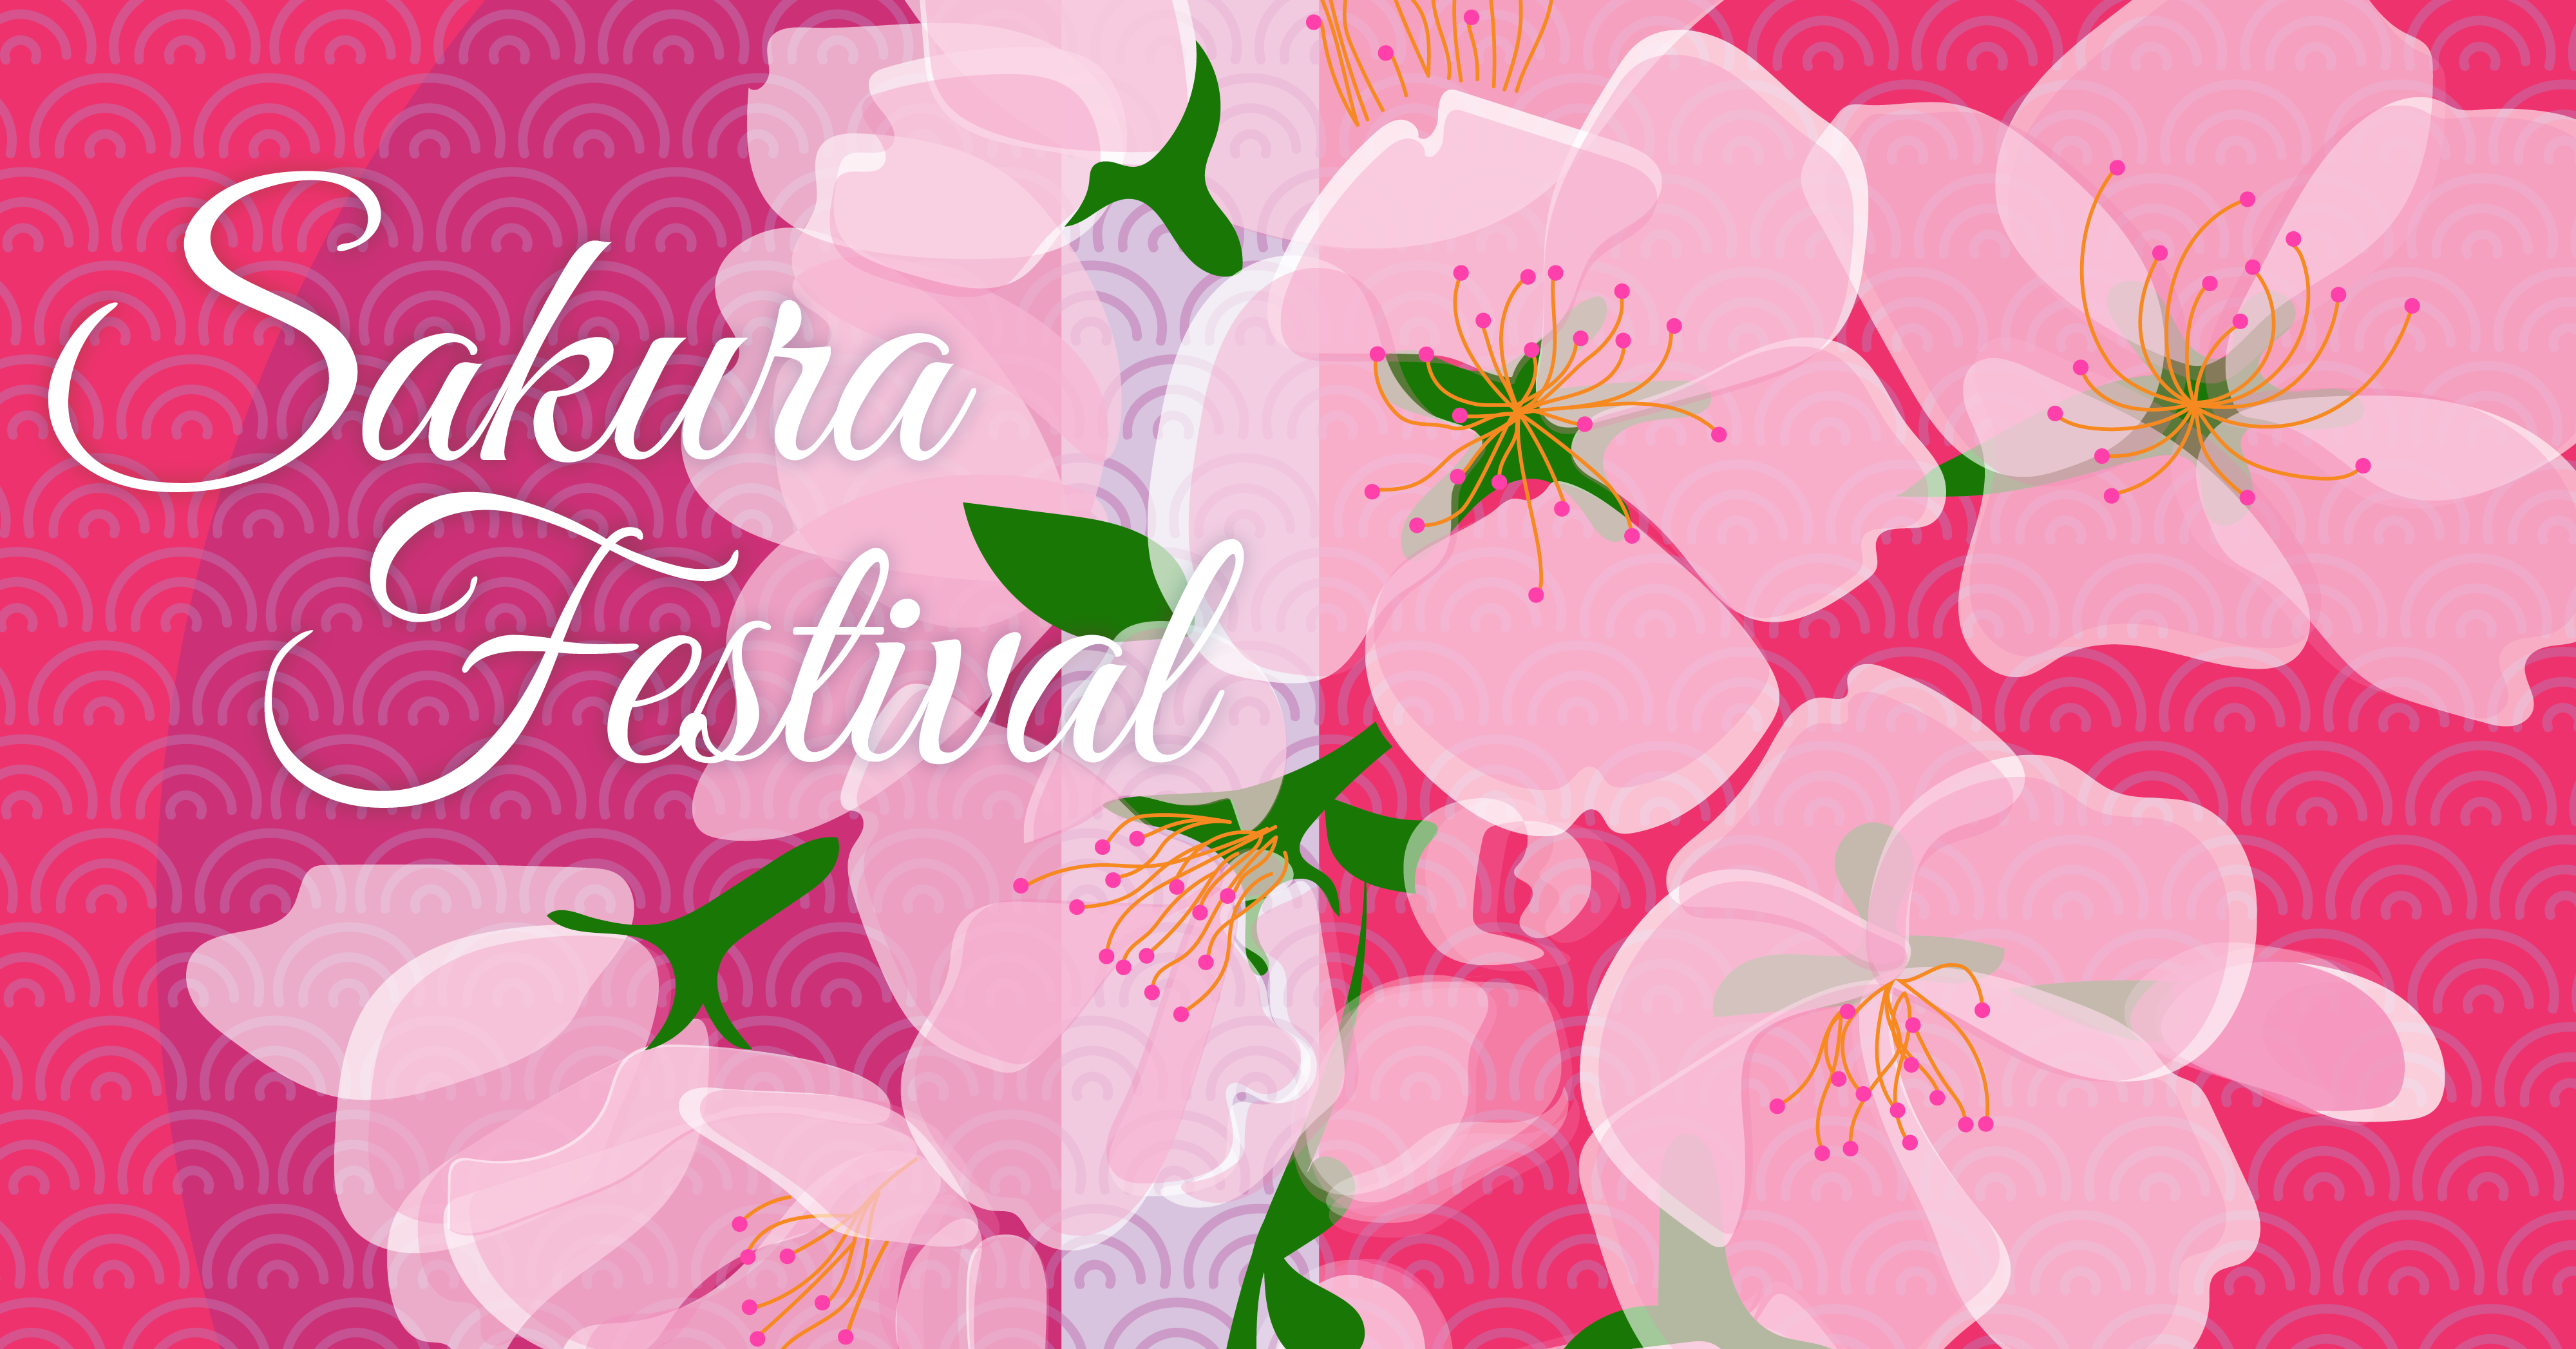 Cherry tree illustration with Sakura Festival in script font